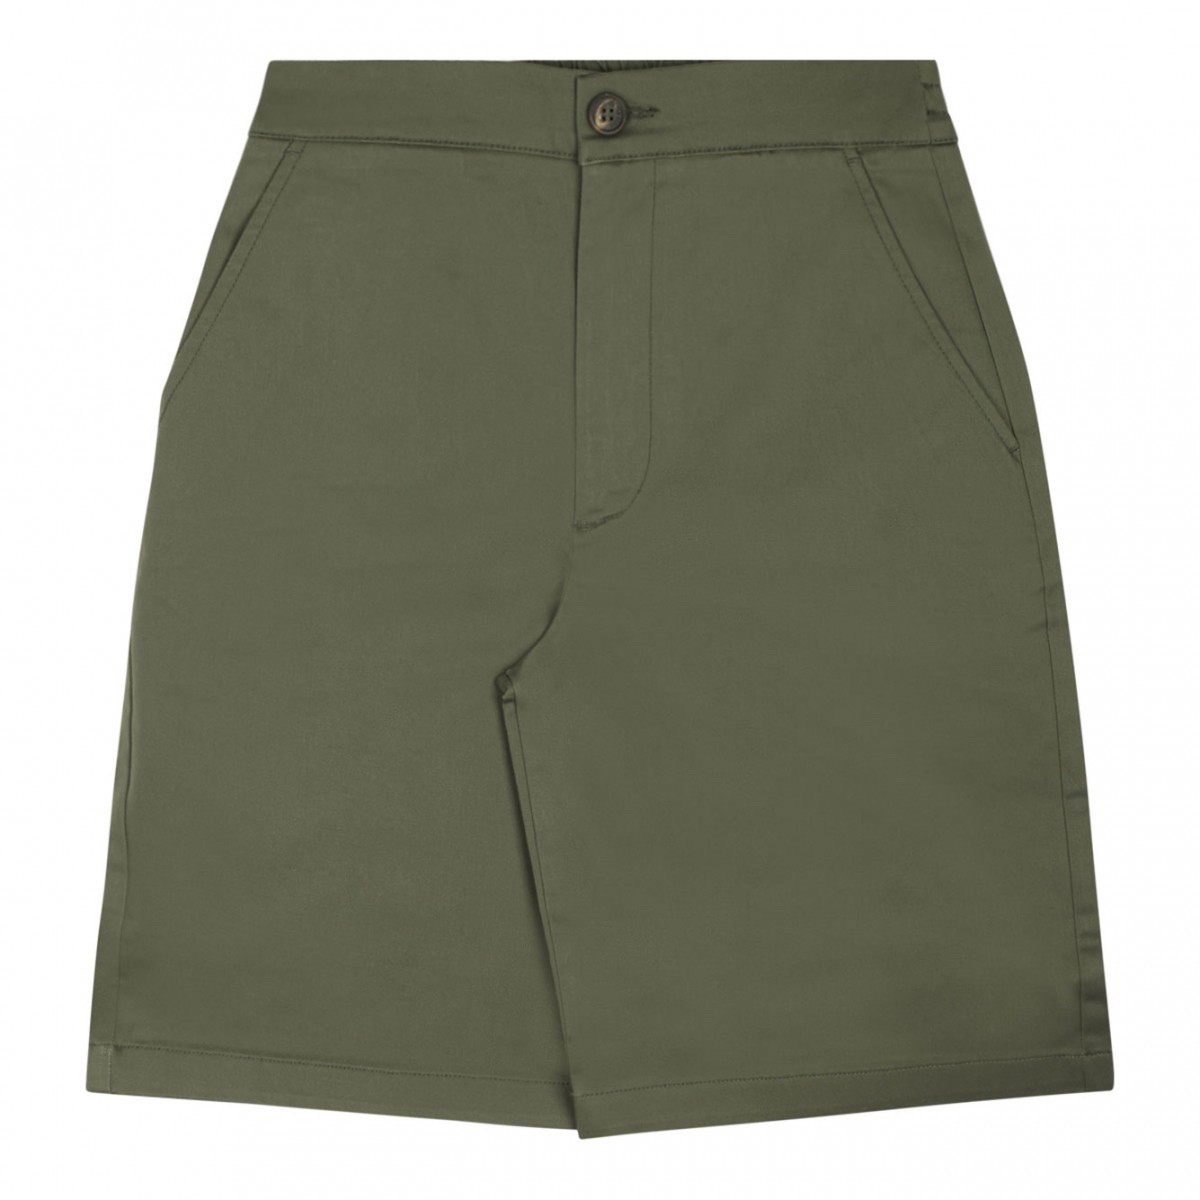 Ivy Green Bermuda Shorts